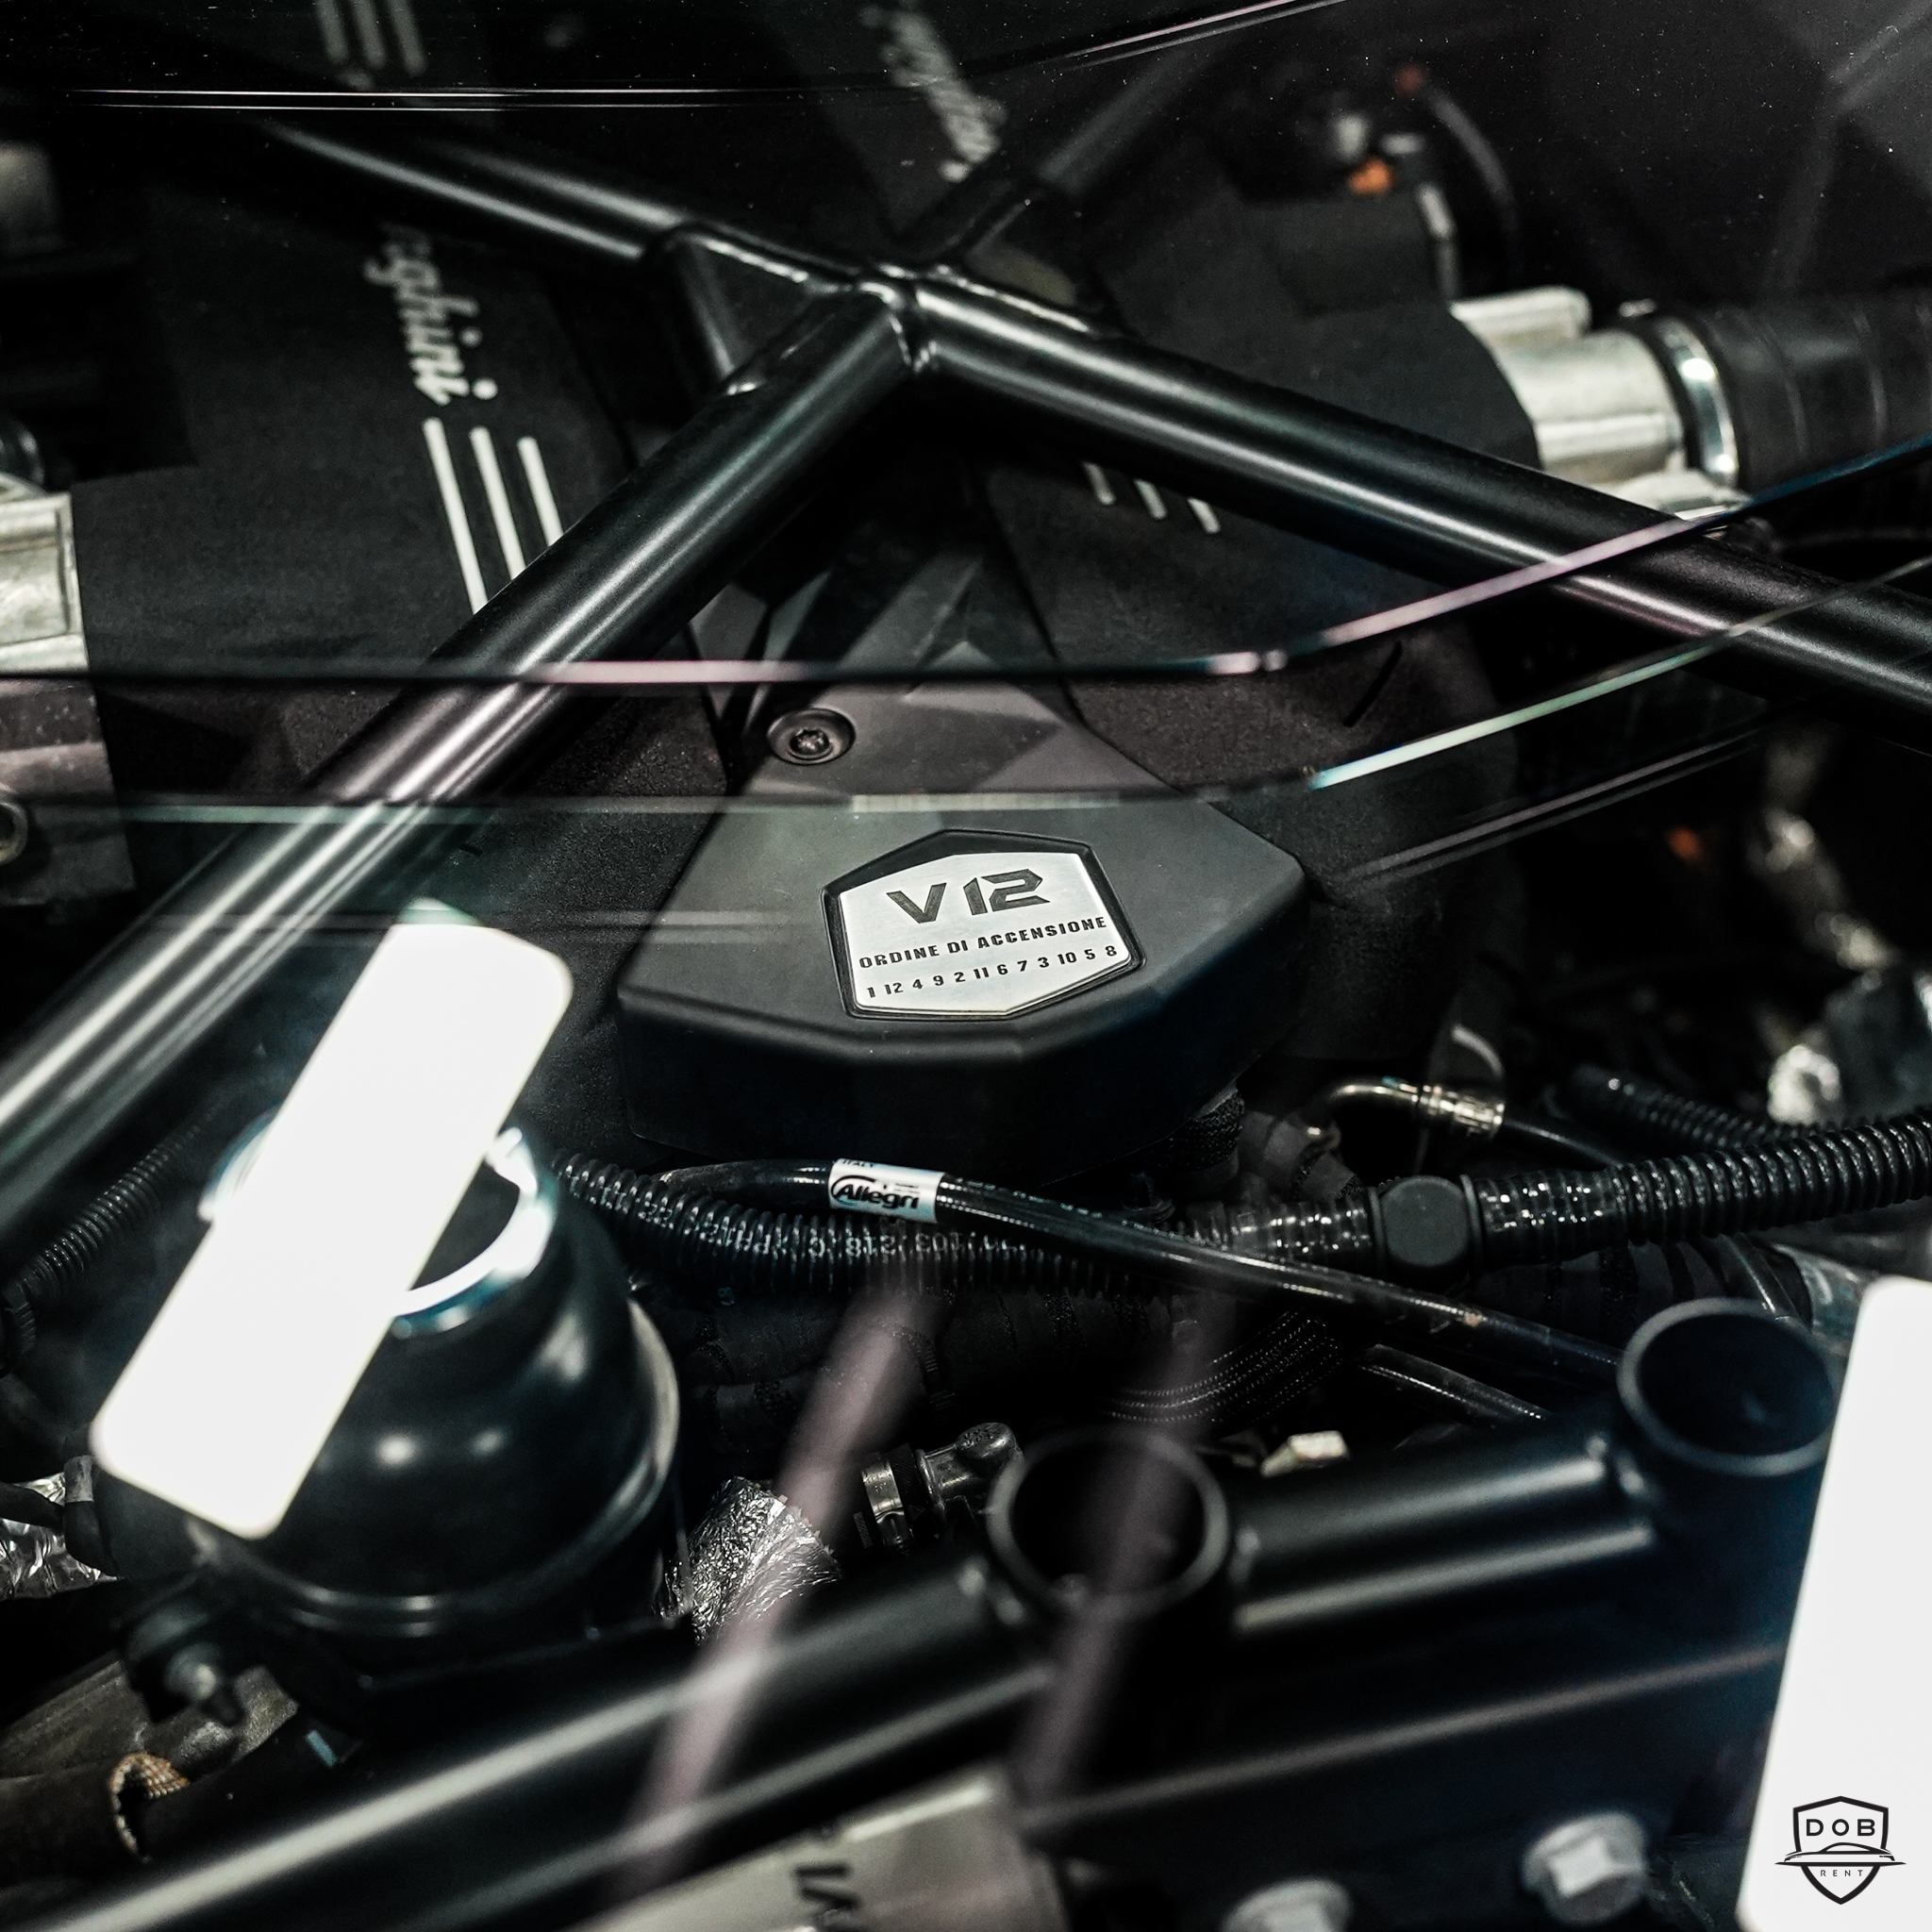 Detailaufnahme des V12 Motor vom Lamborghini Aventador